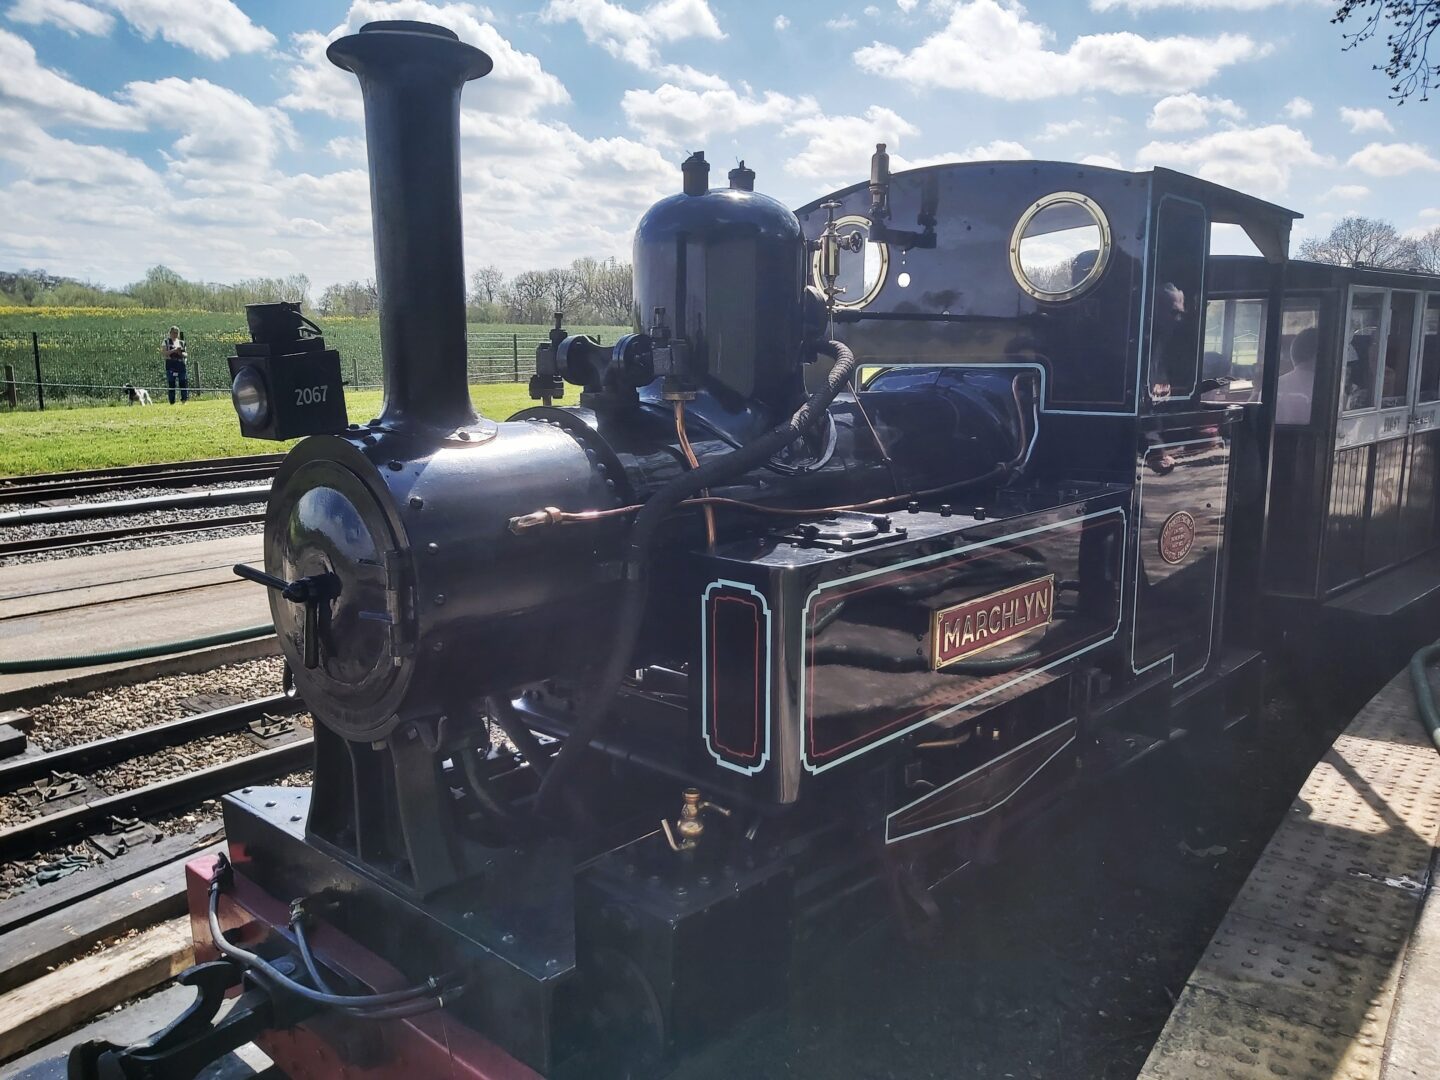 Narrow gauge steam engine at Statfold Barn Tamworth West Midlands